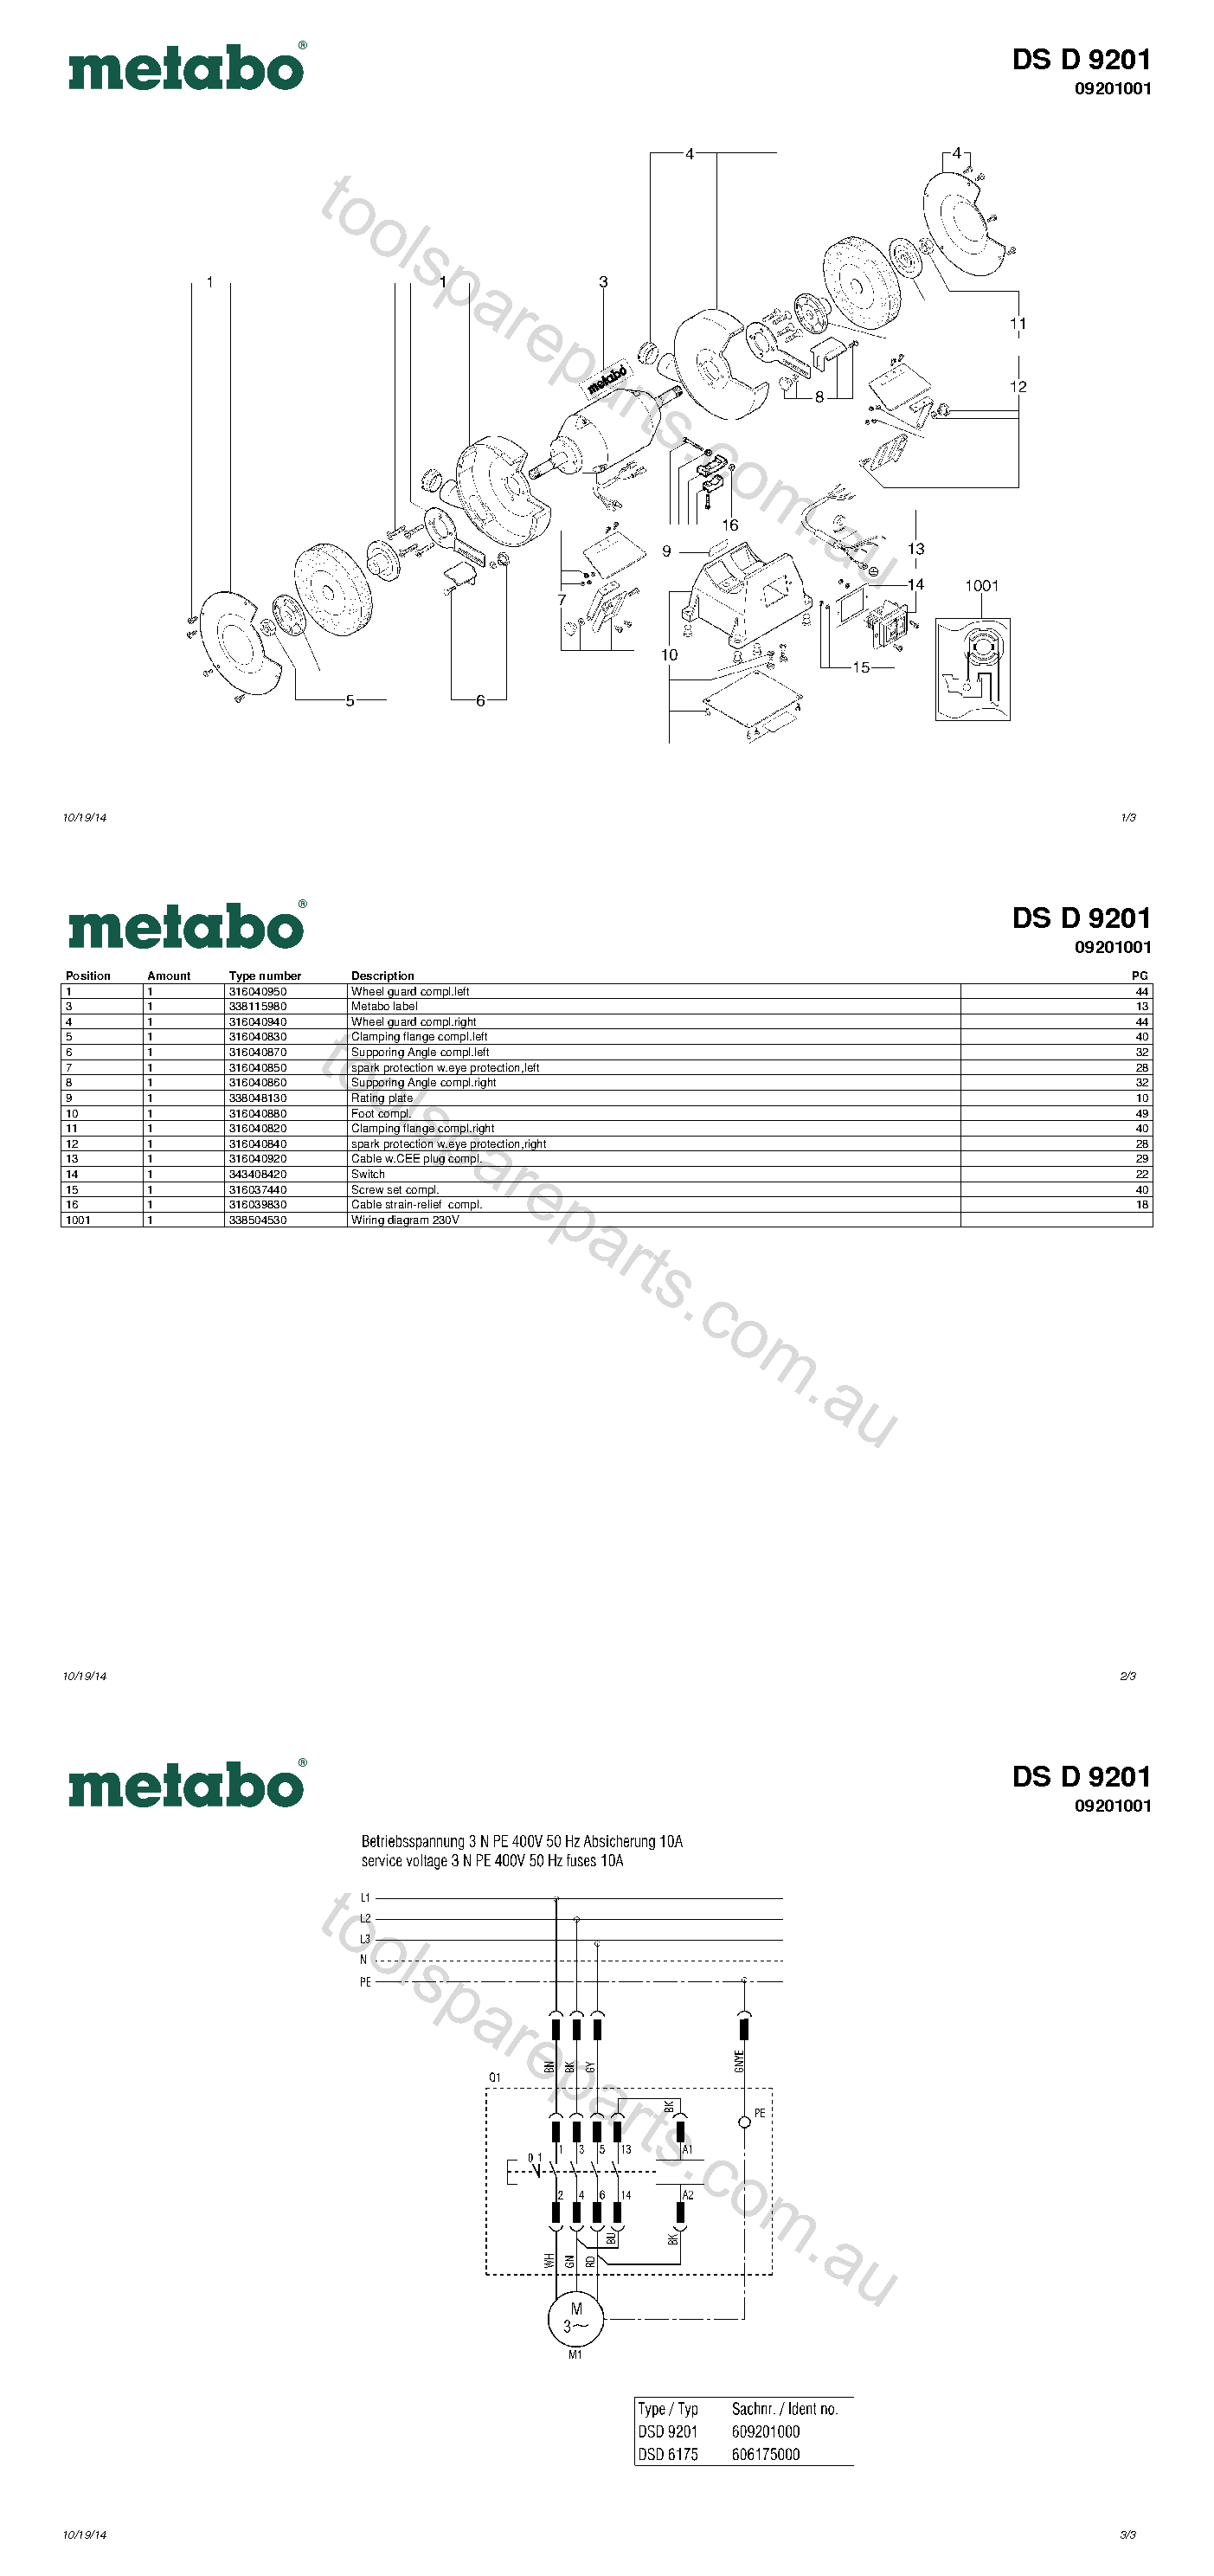 Metabo DS D 9201 09201001  Diagram 1